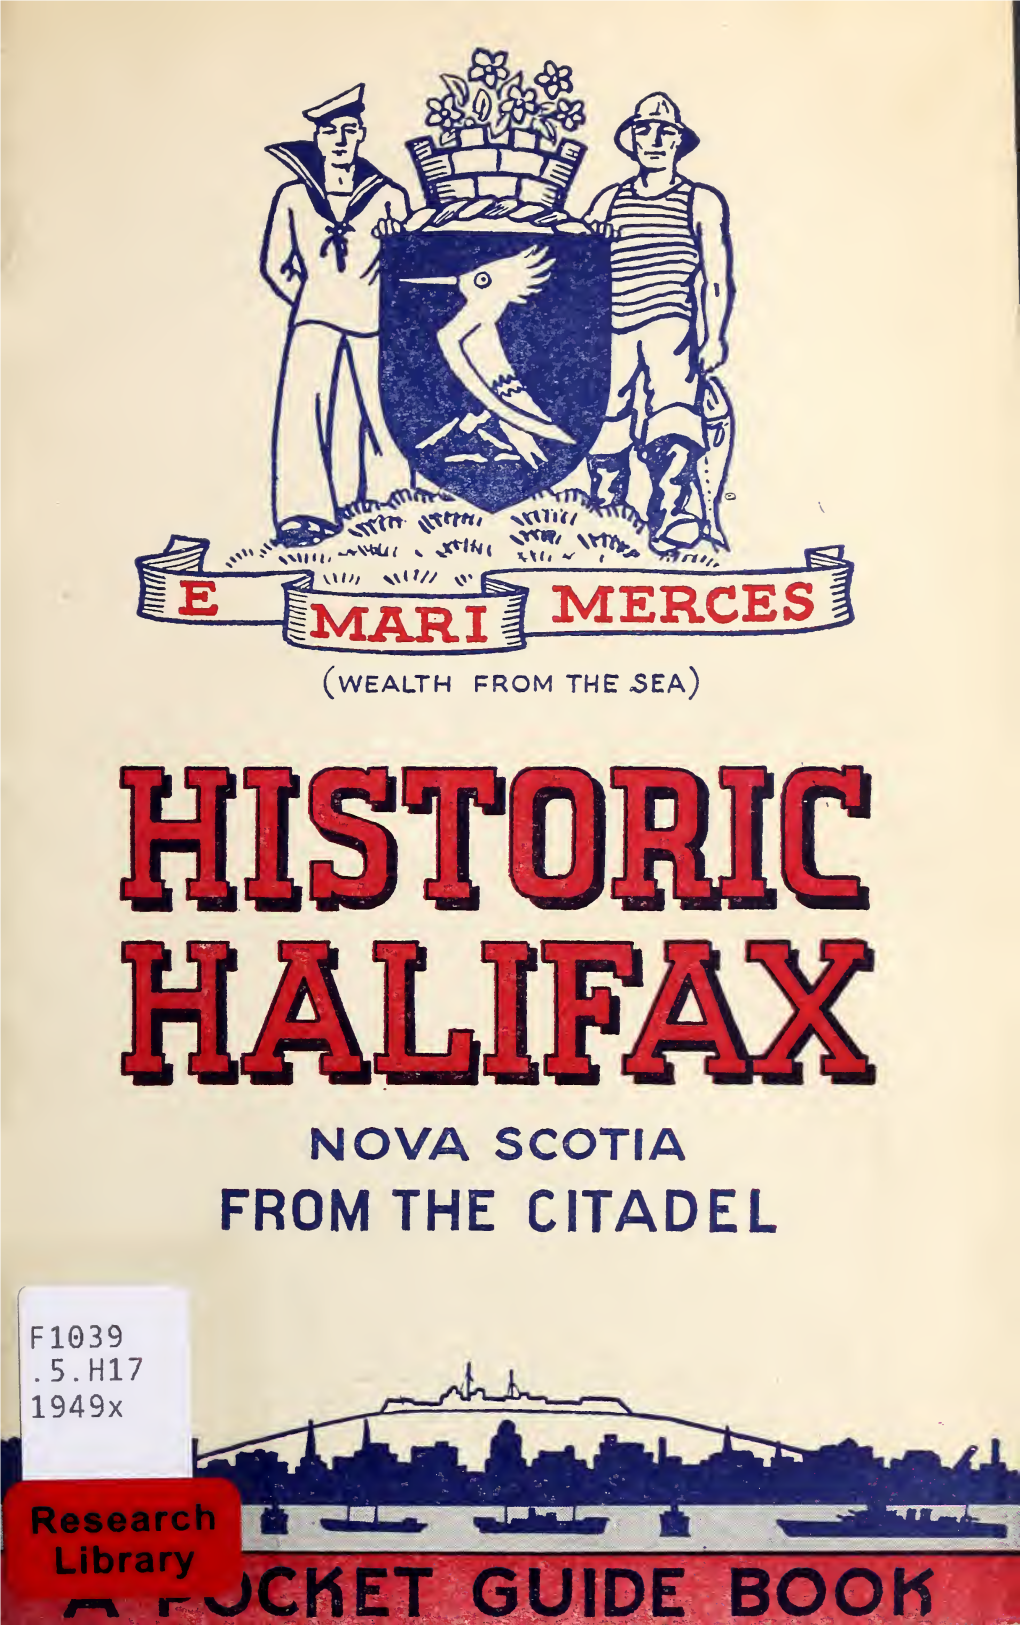 A Pocket Guide Book of Historic Halifax, Nova Scotia, from the Citadel